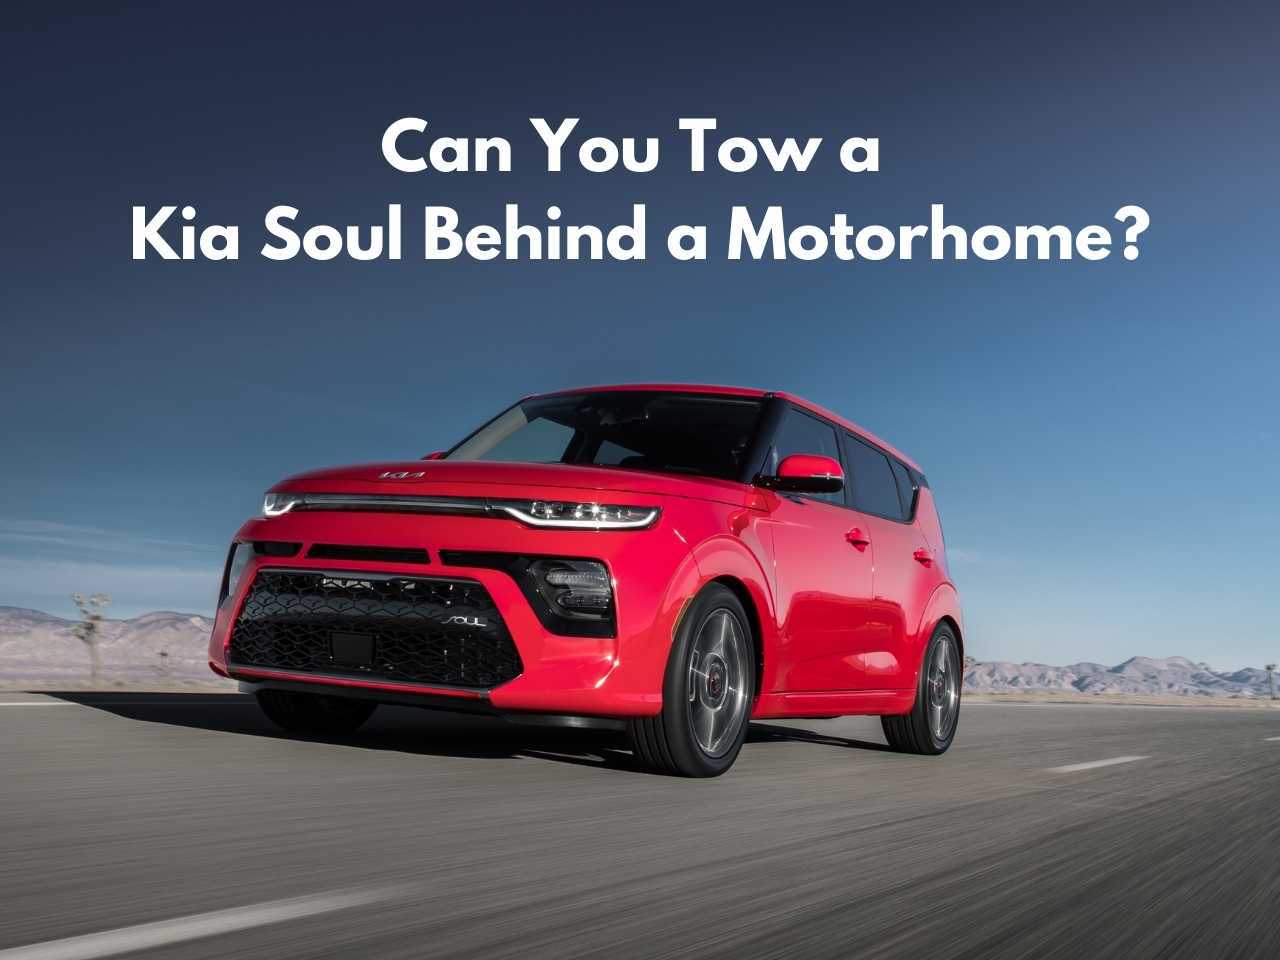 Can You Tow a Kia Soul Behind a Motorhome